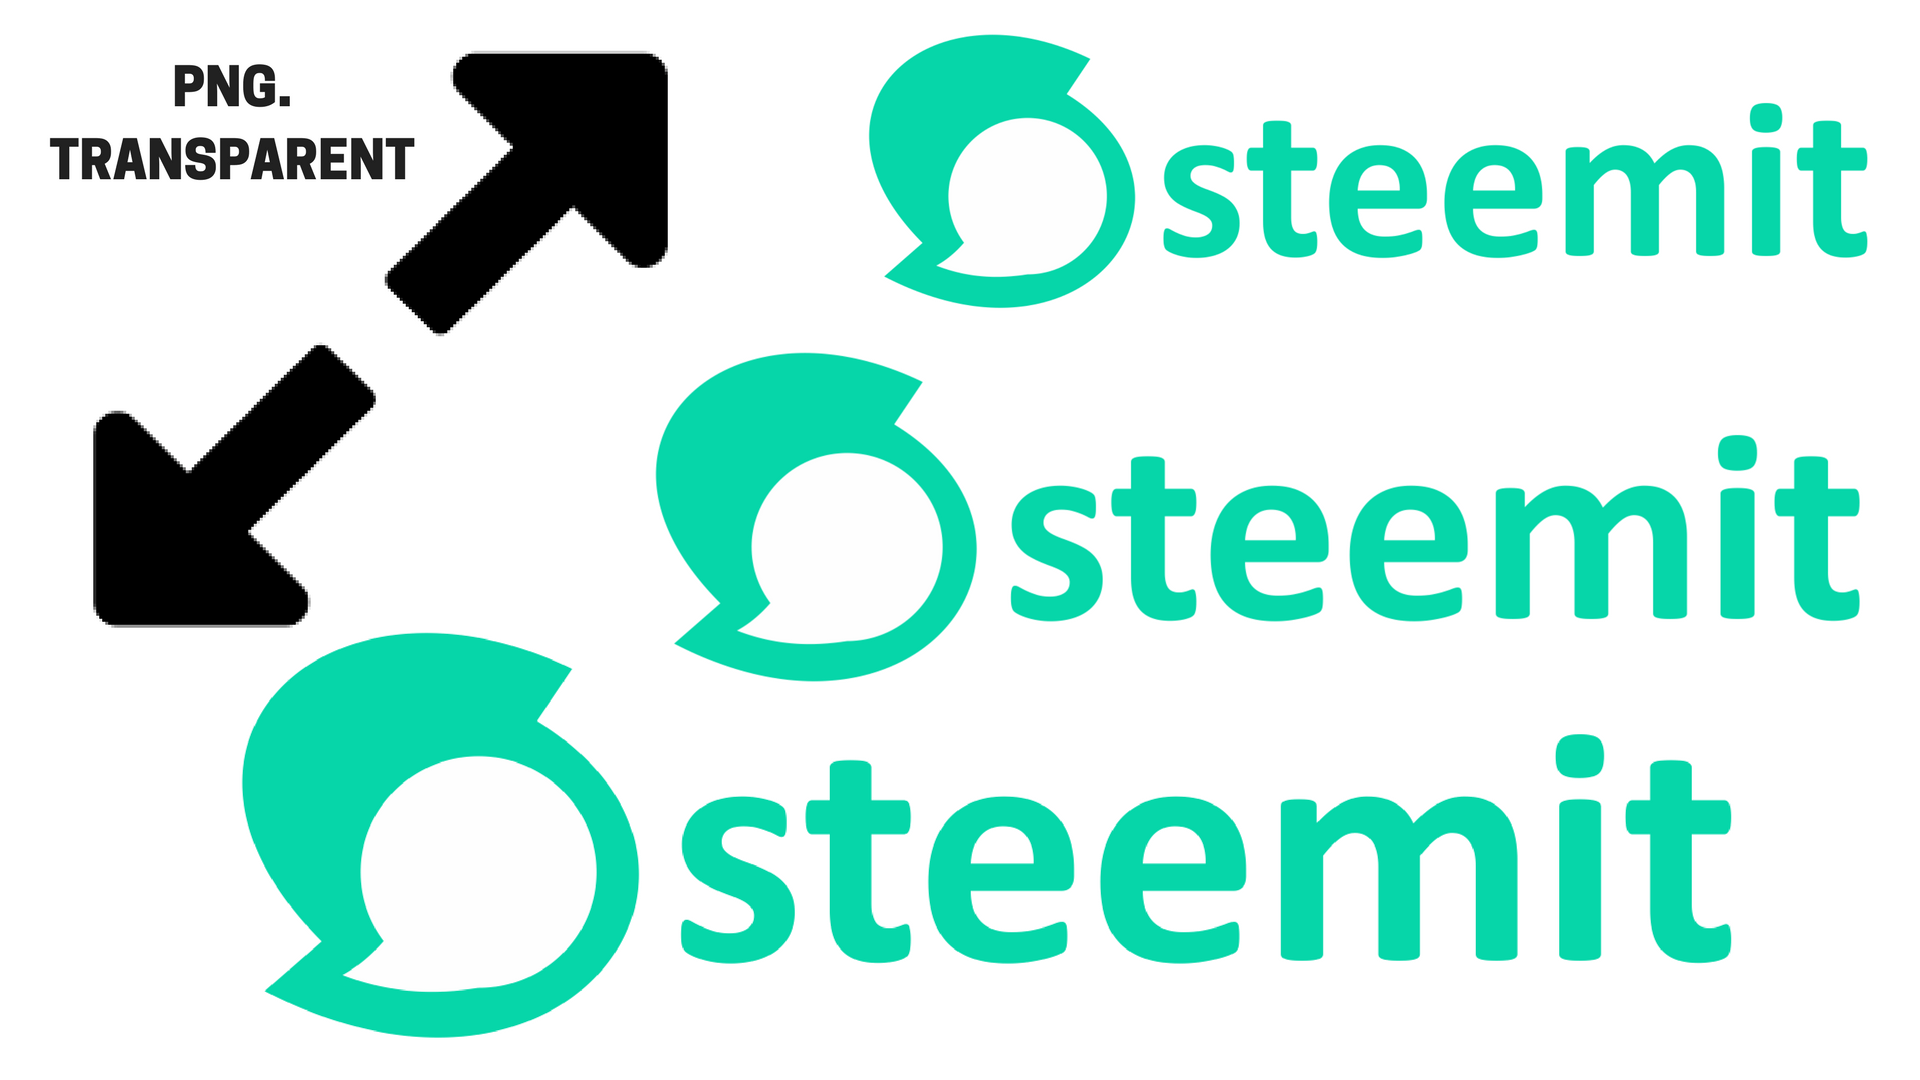 Steemit Logo - Resized High Resolution Steemit Logos for Photo Editing